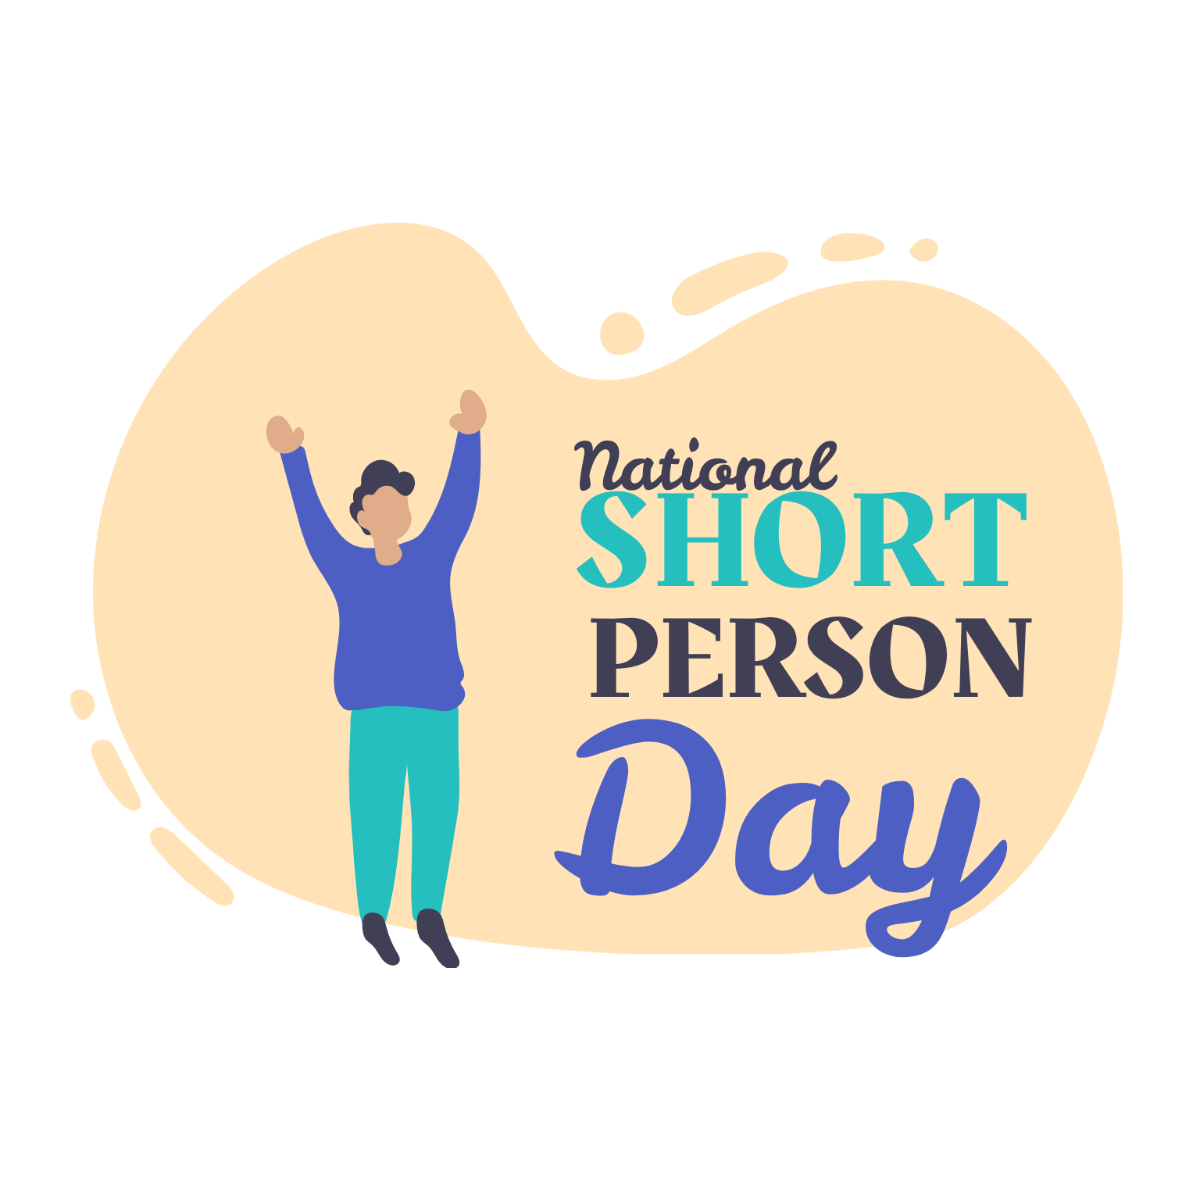 National Short Person Day Cartoon Vector Template